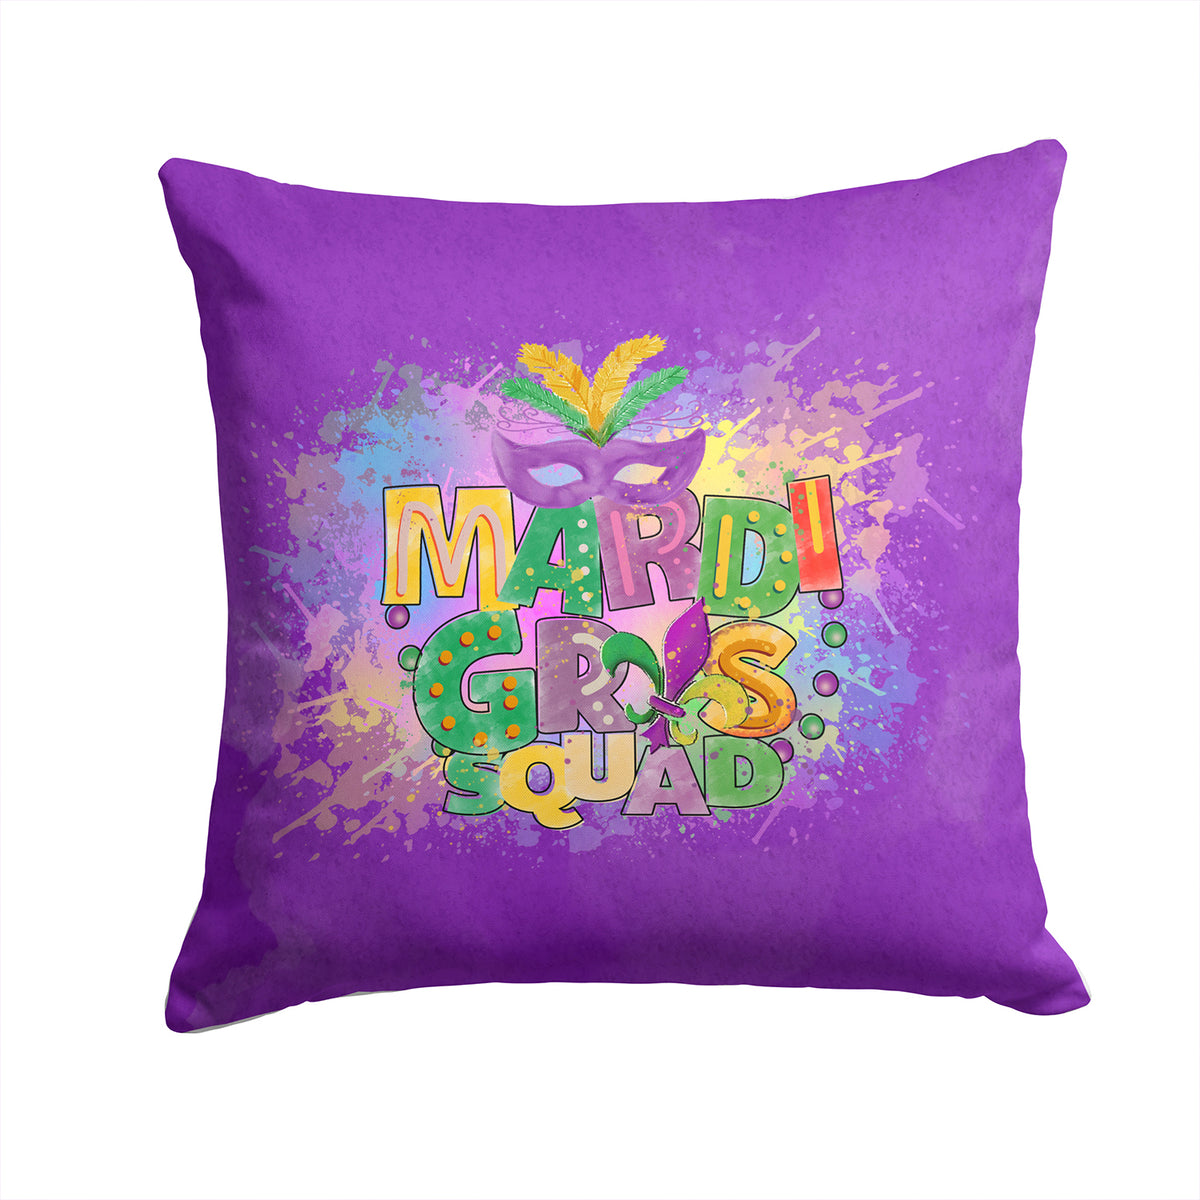 Buy this Mardi Gras Squad Fabric Decorative Pillow